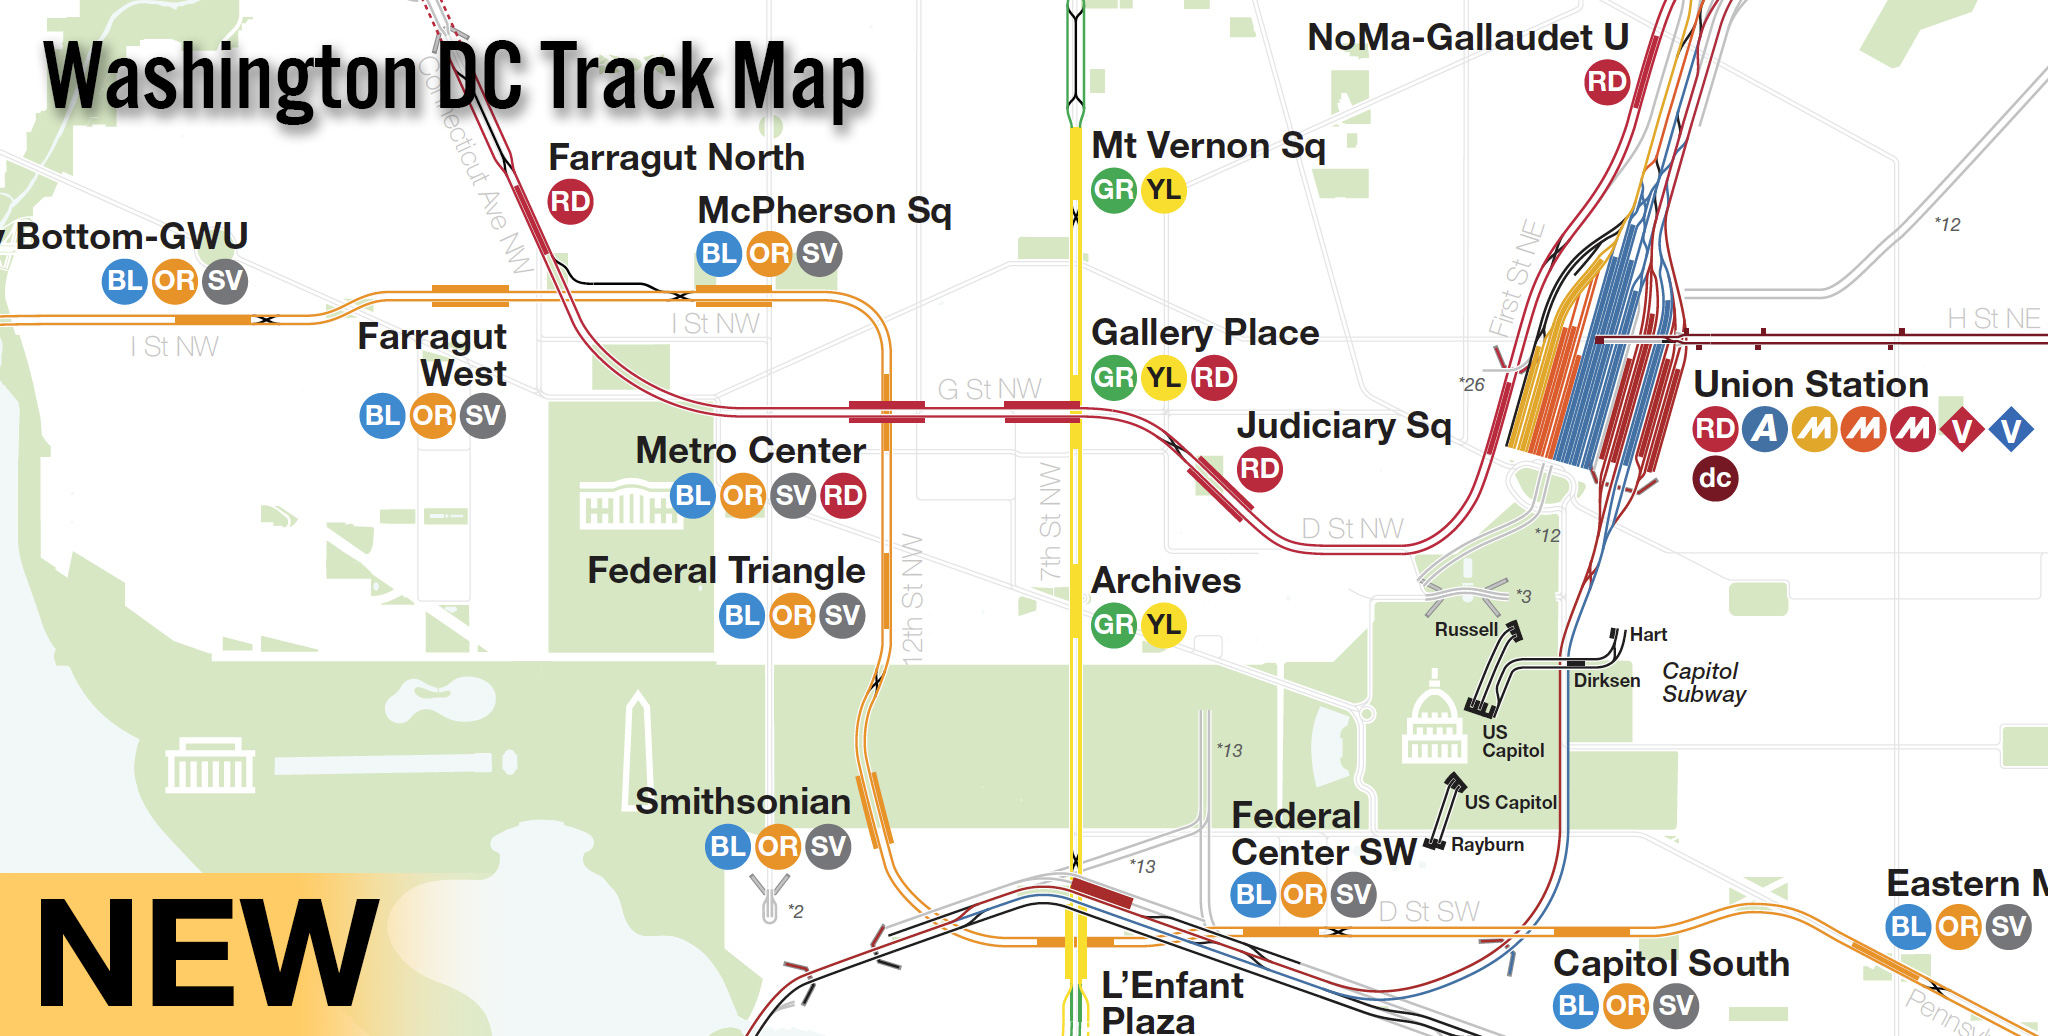 Washington DC Track Map